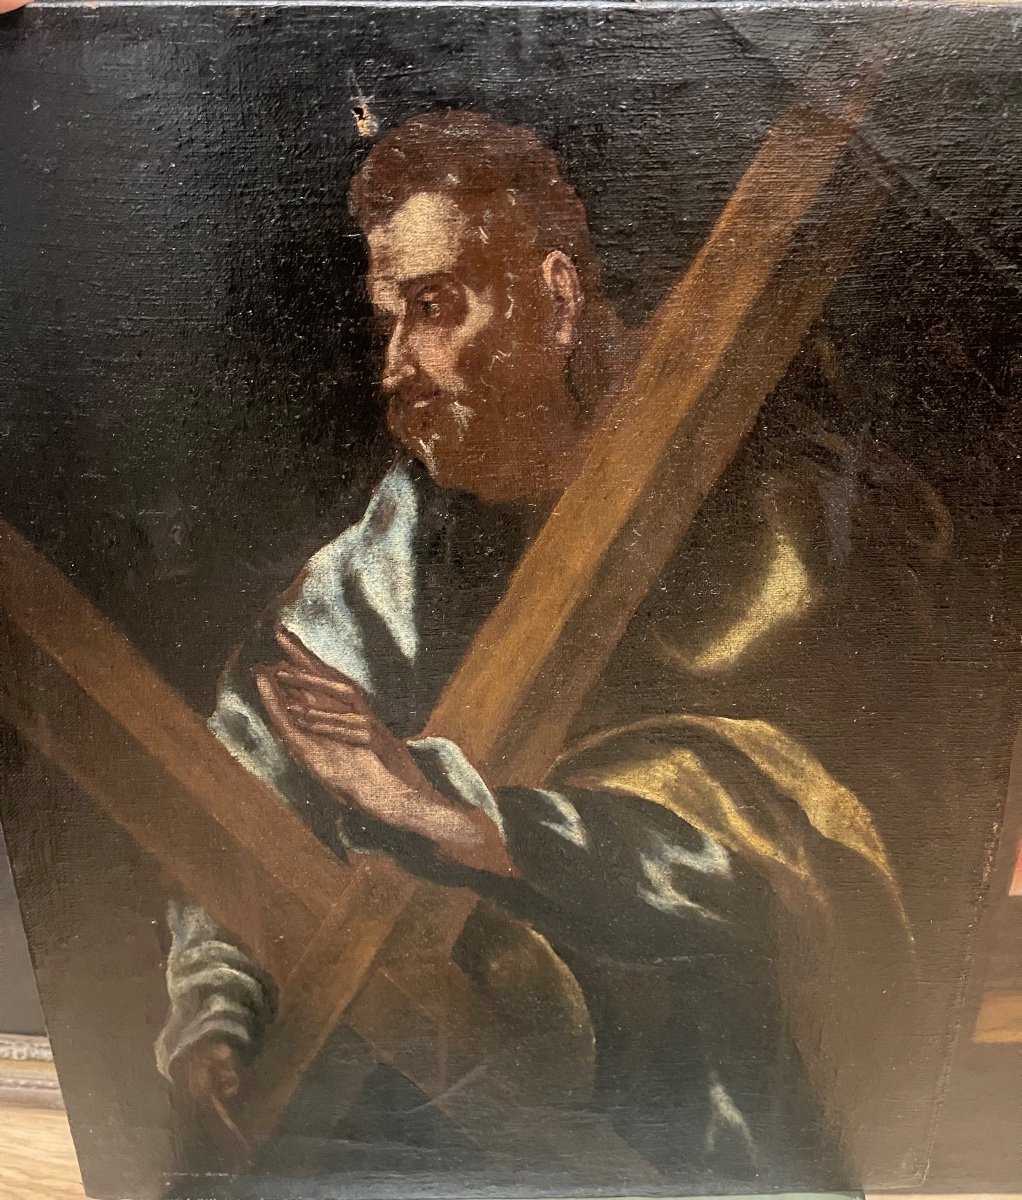 Workshop Of Greco (1541-1614). Saint Andrew. Apostolate. New Variant.